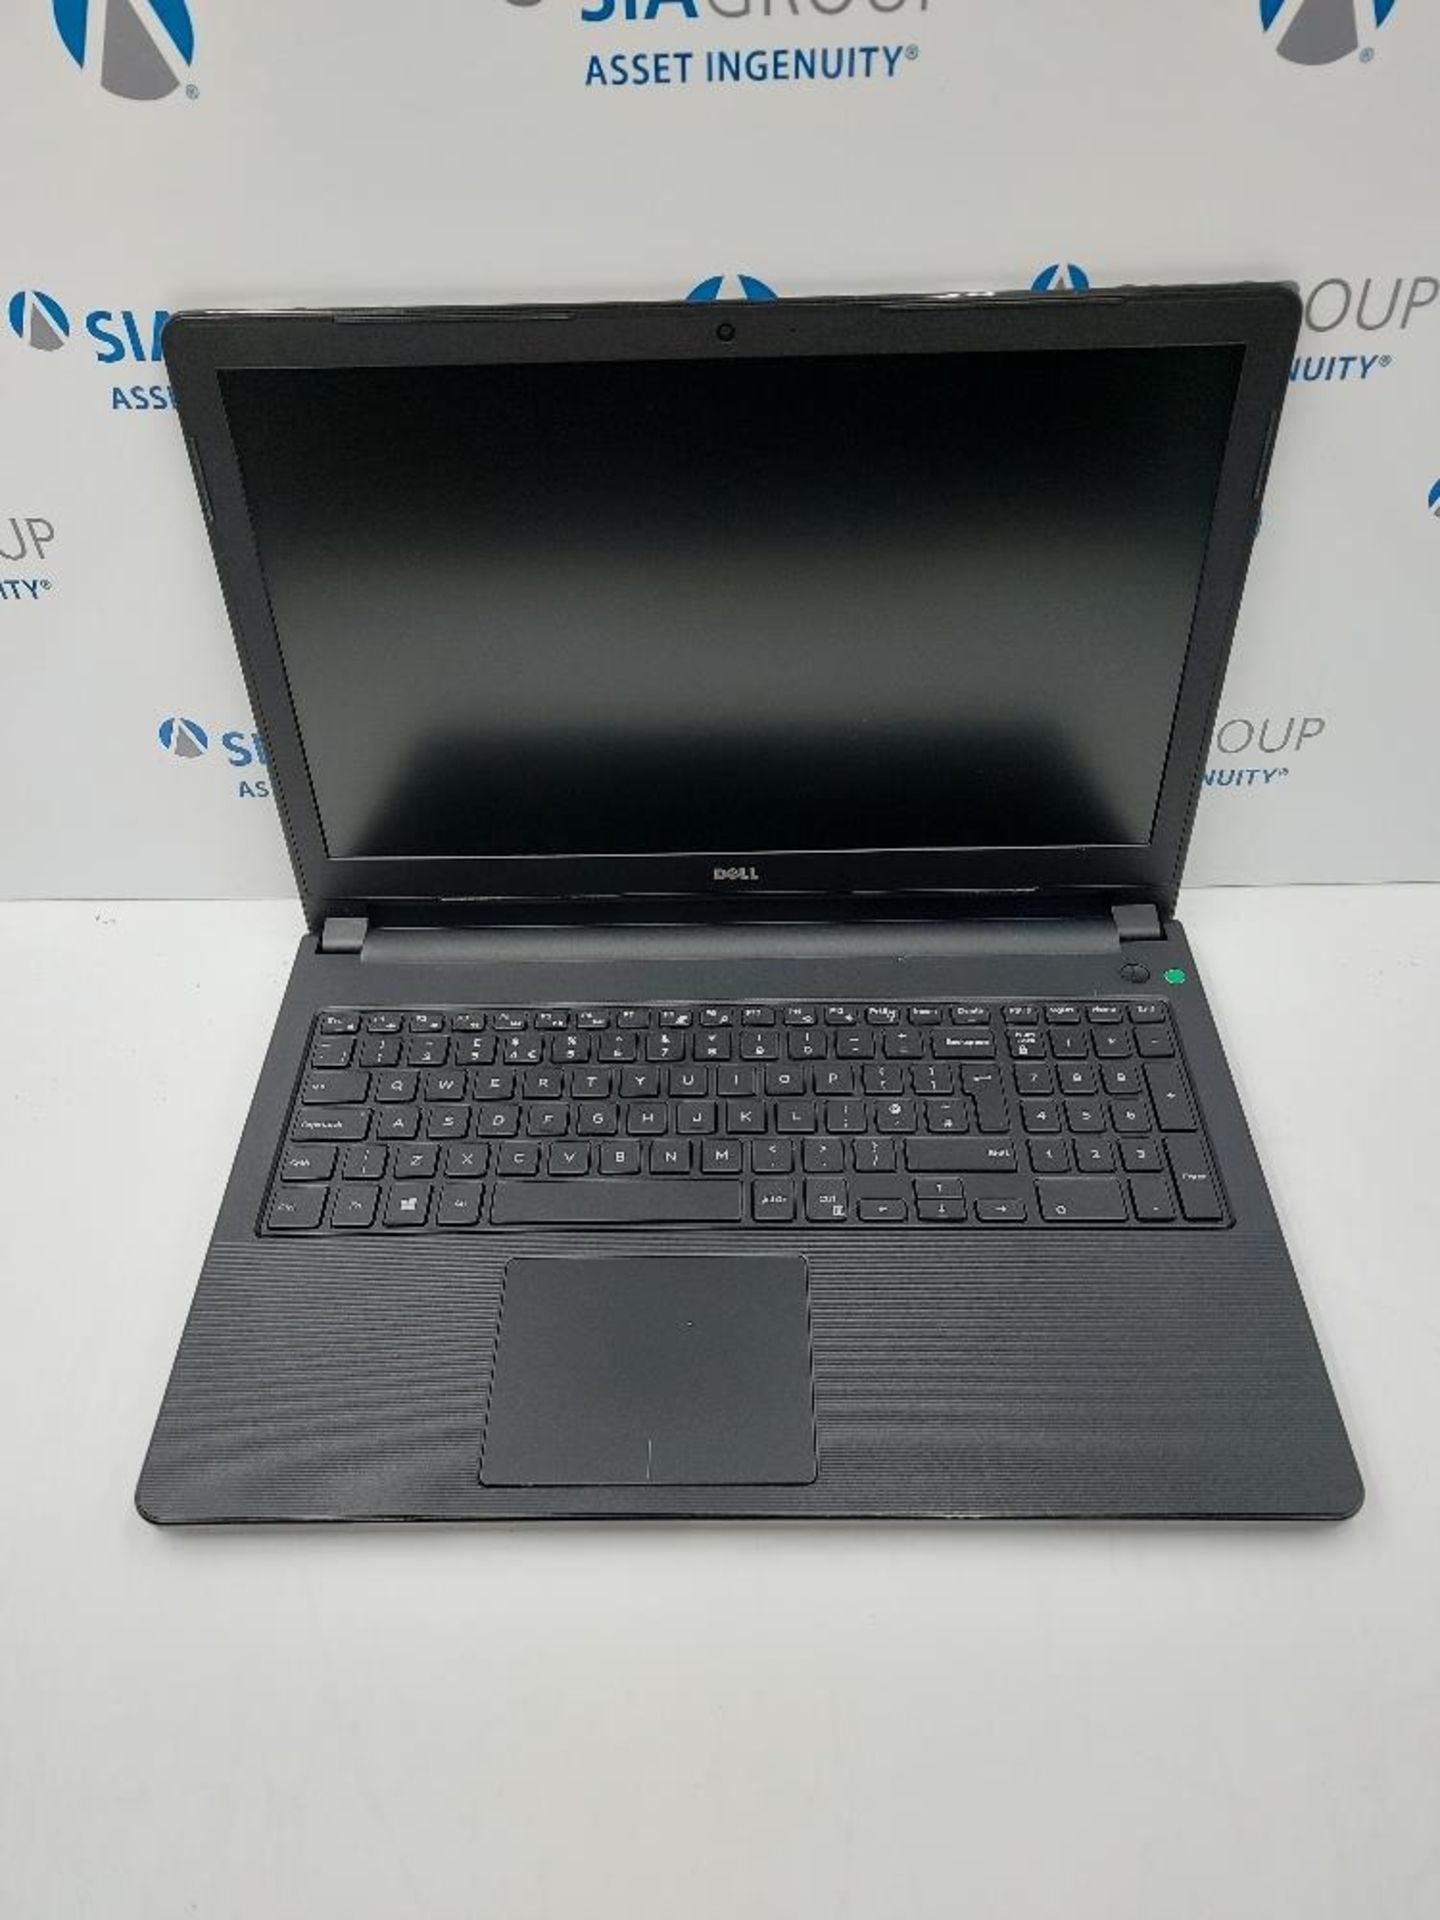 Dell Vostro Windows 7 Laptop with Peli Case - Image 3 of 7